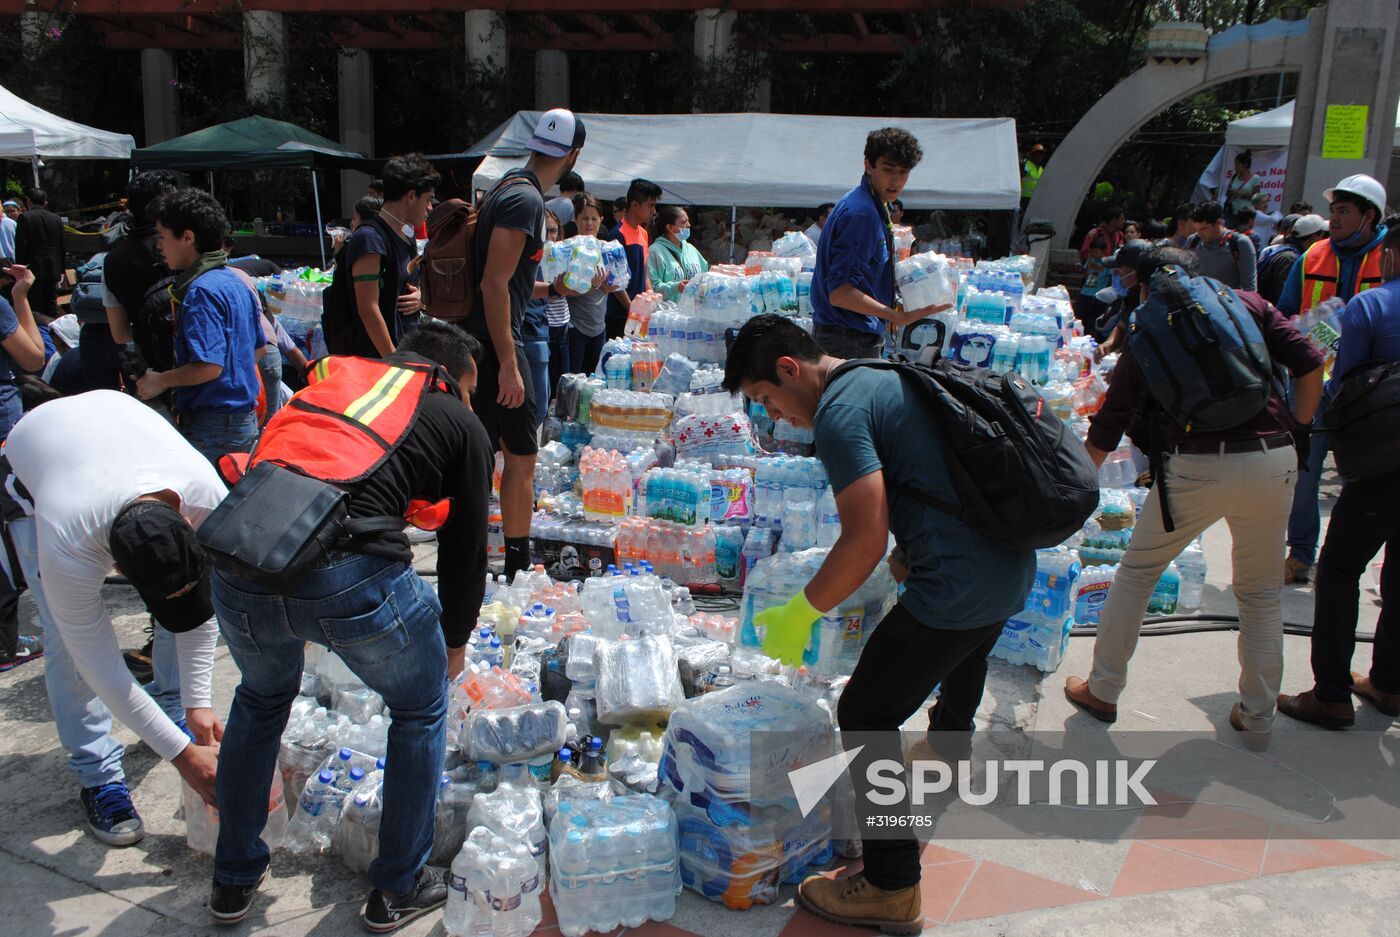 Mexico provides humanitarian aid to earthquake victims